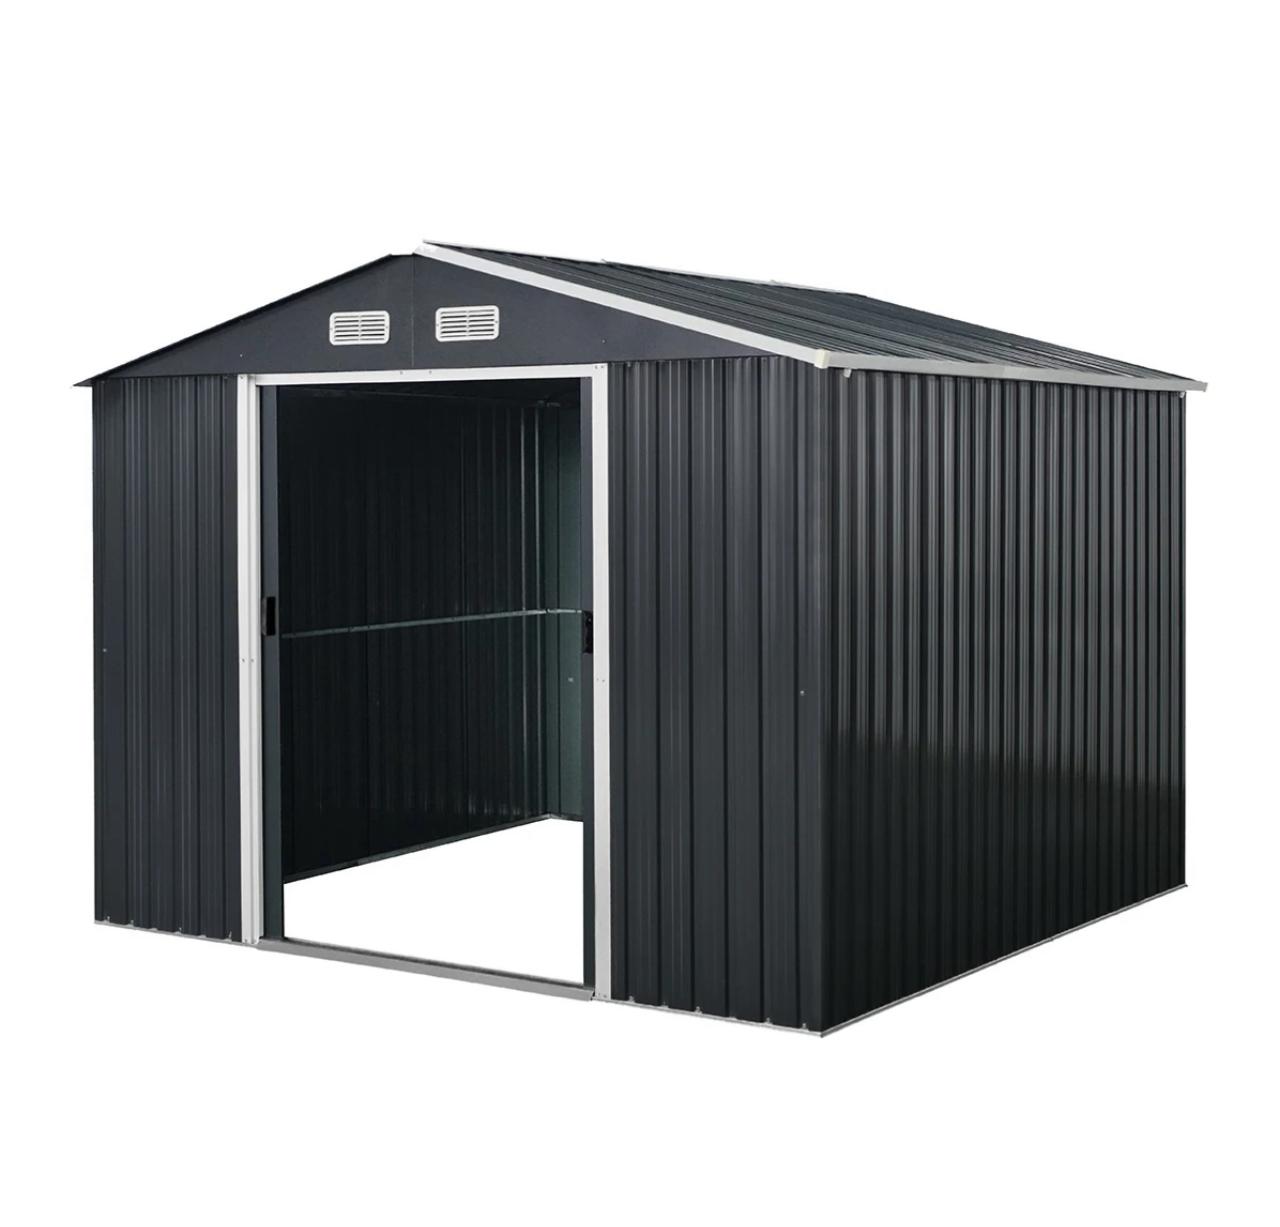 Outdoor Metal Tin Garden Storage Shed For Backyard with lockable doors